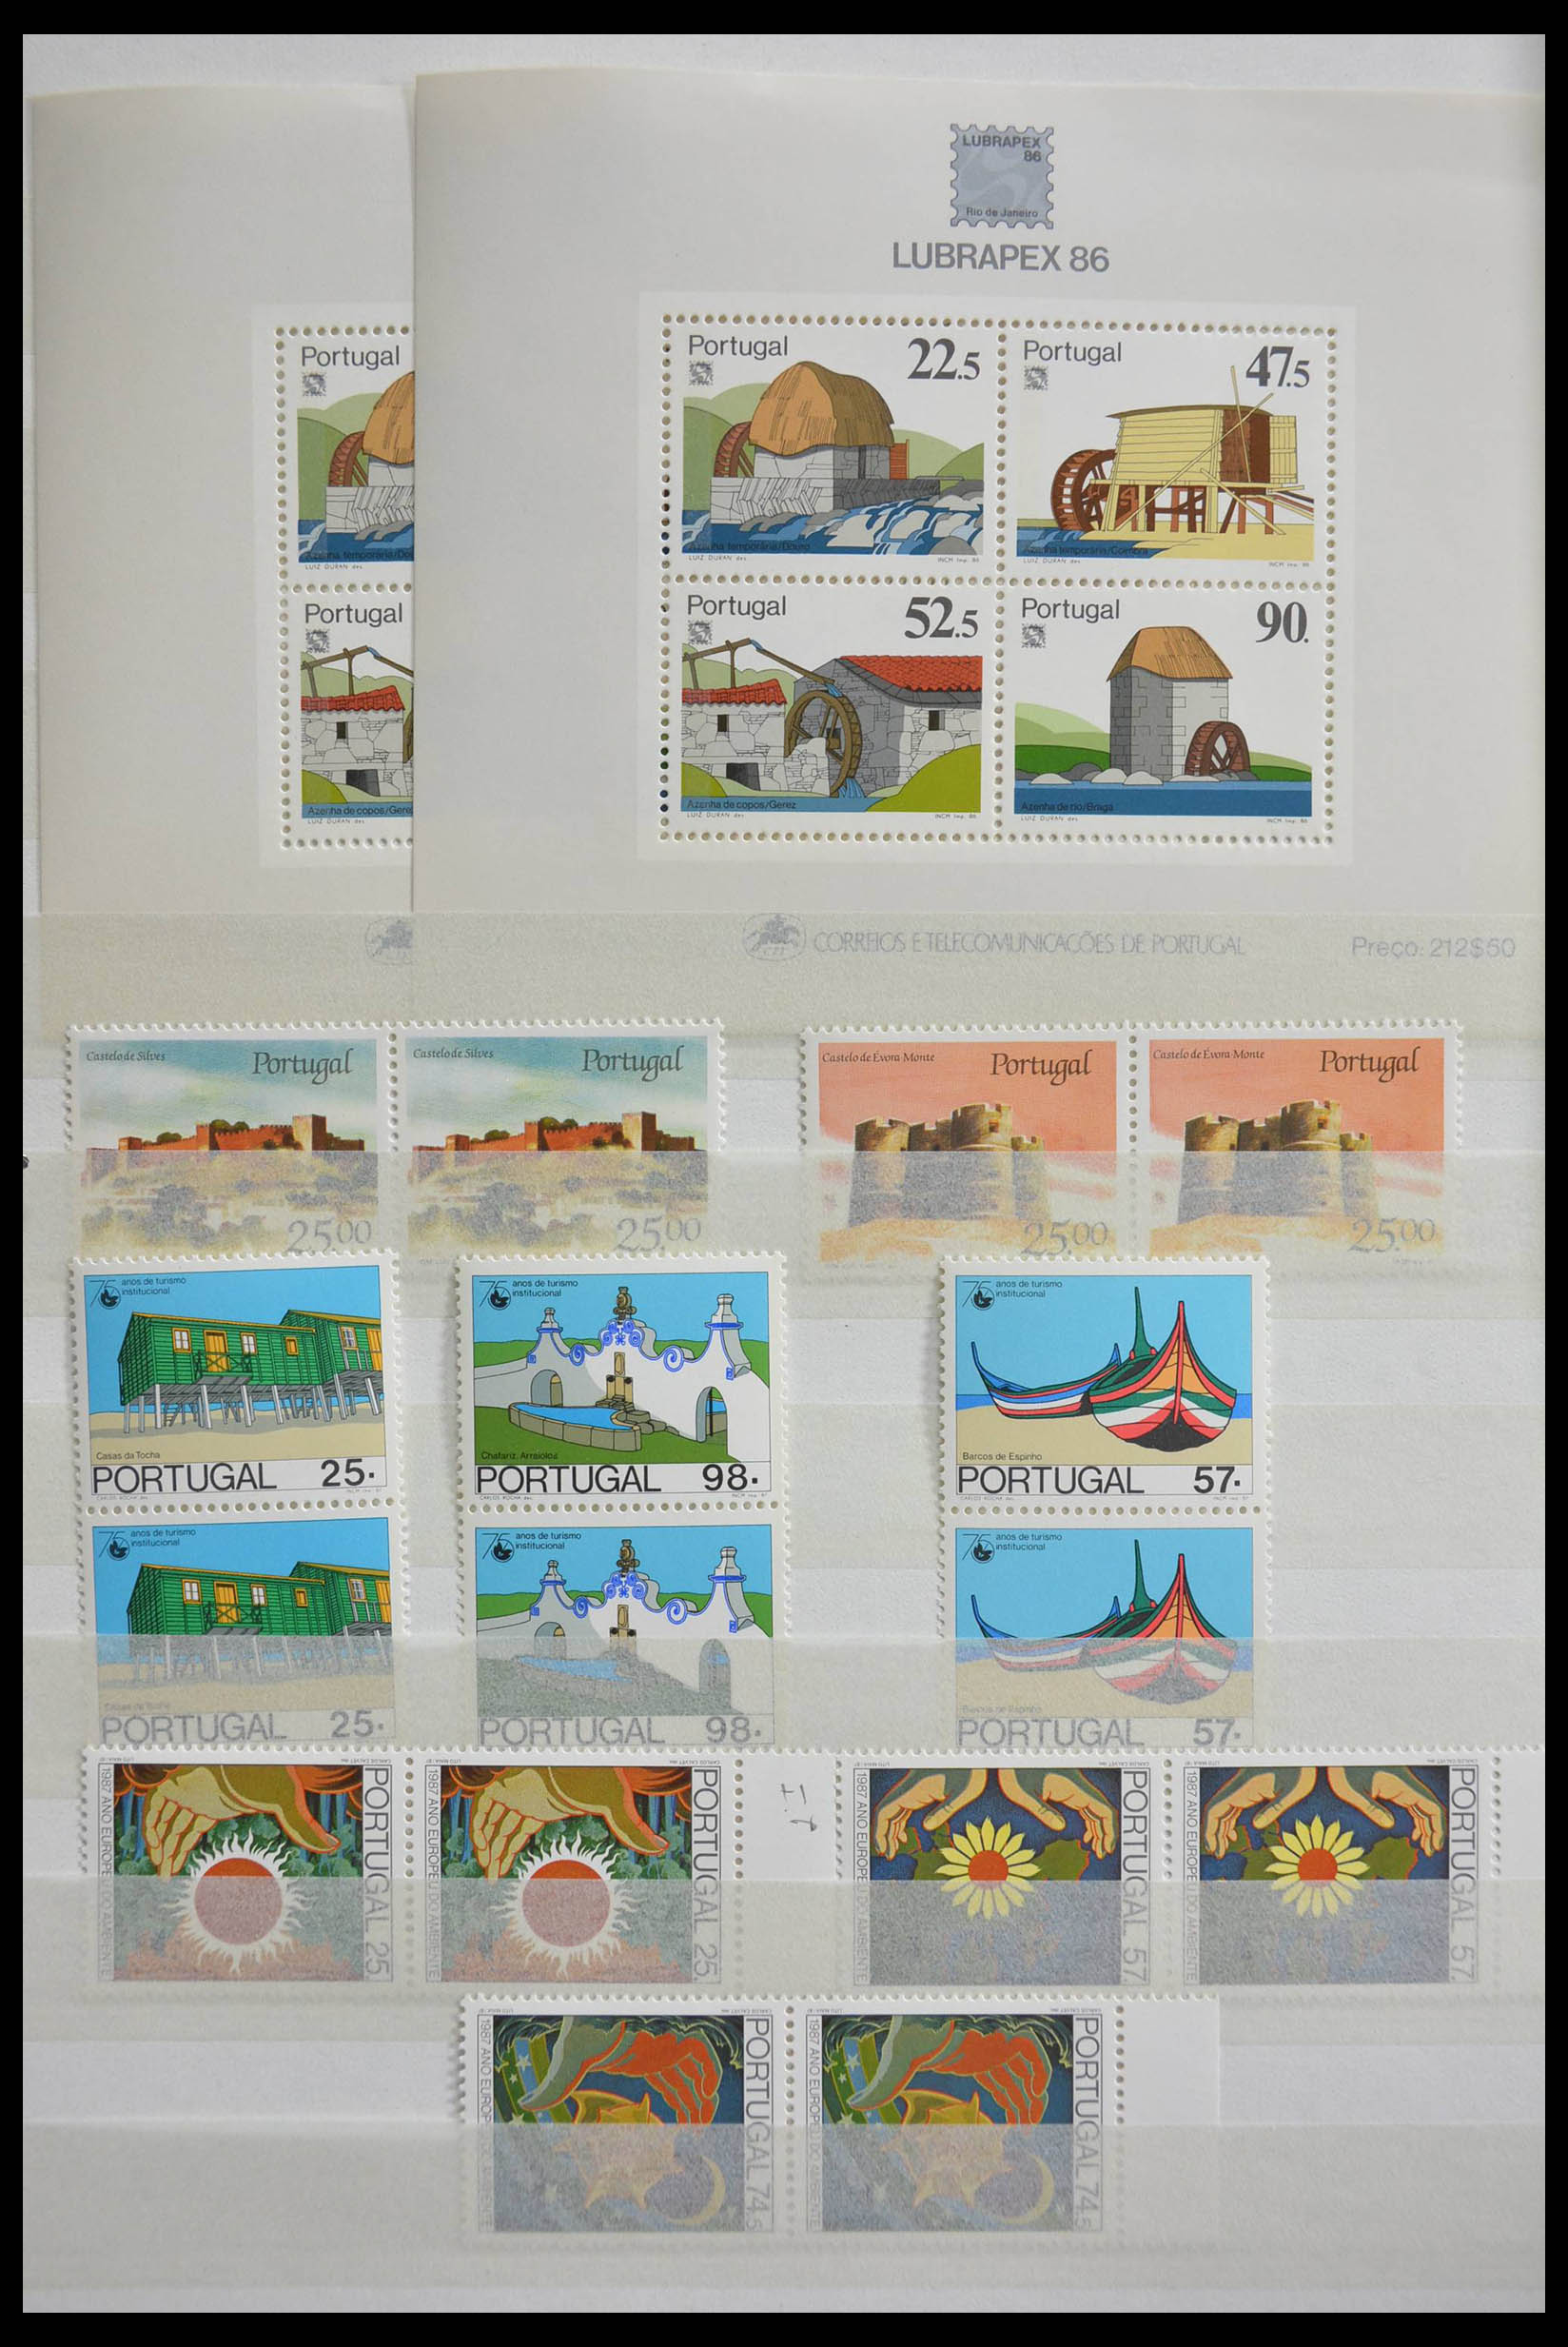 28540 048 - 28540 Portugal souvenir sheets.